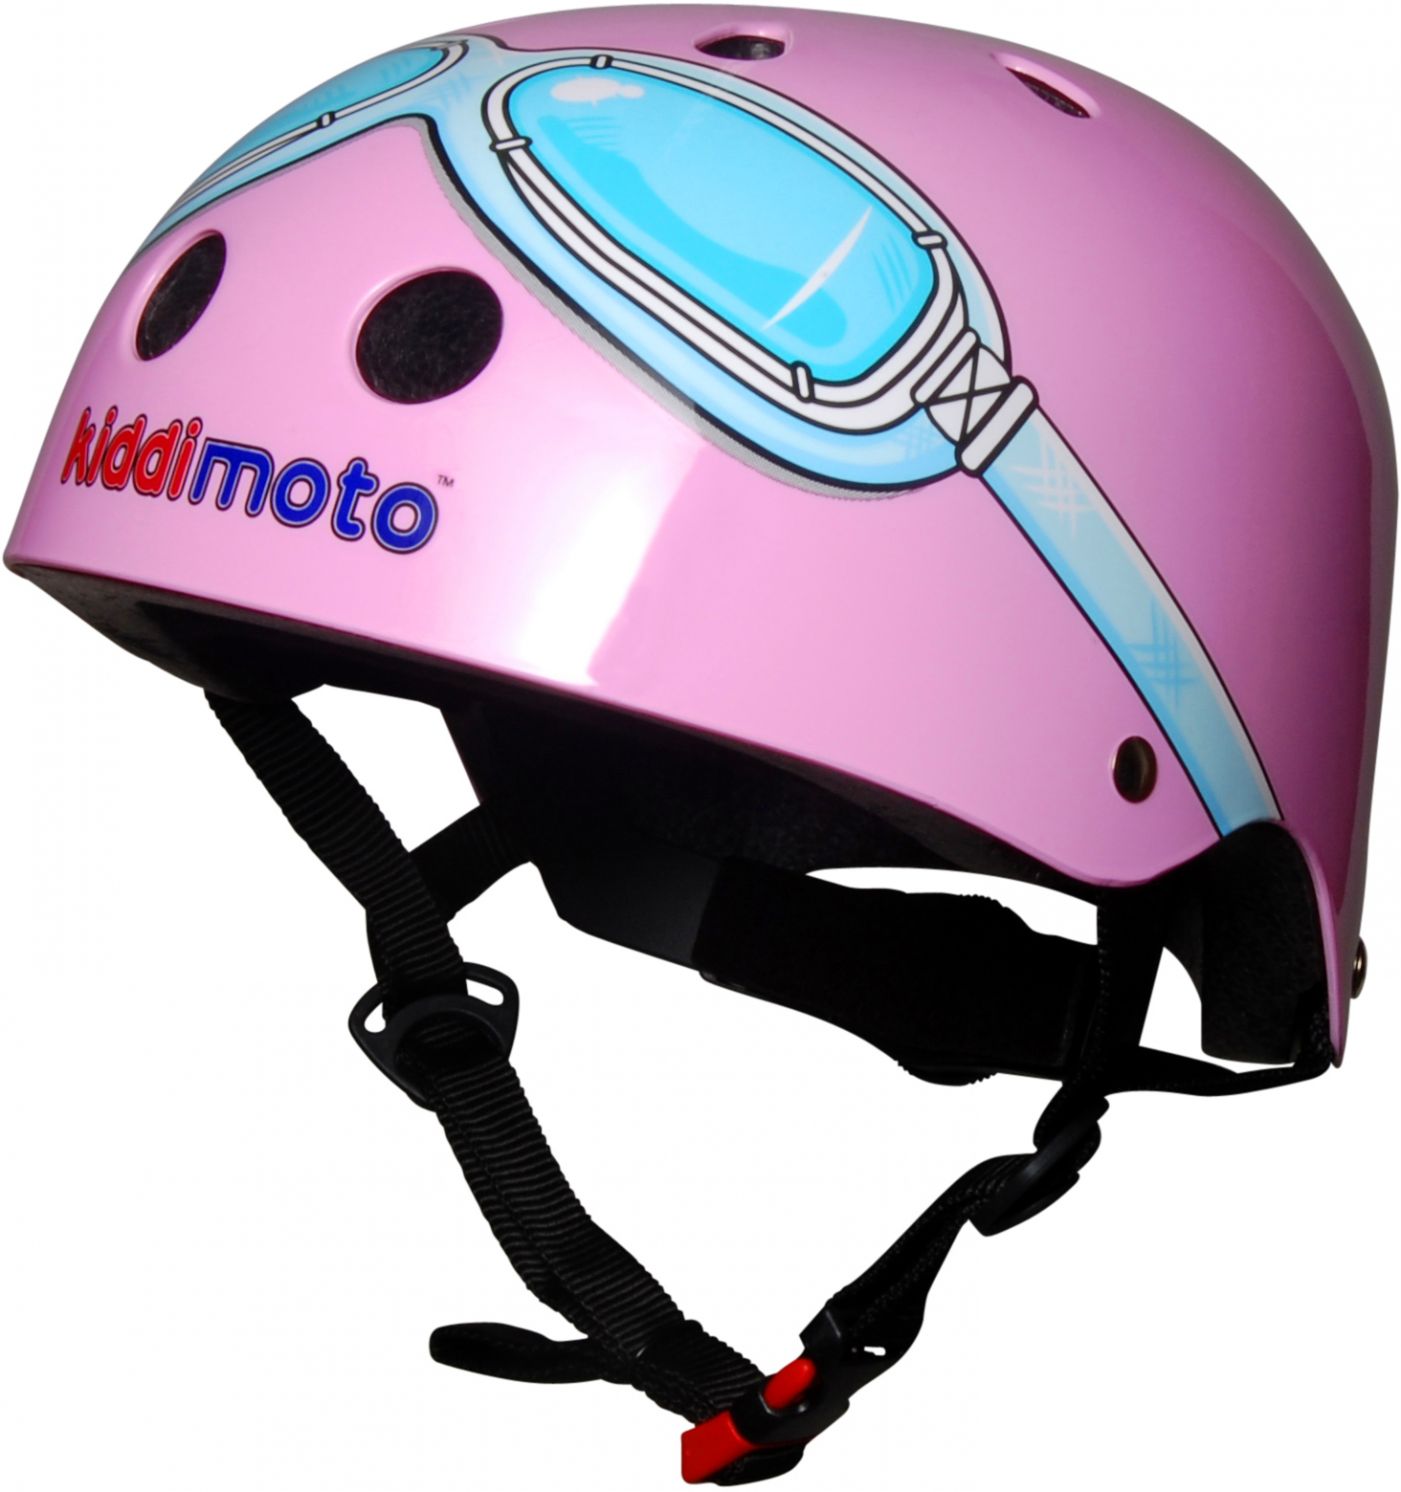 Шлем детский Kiddimoto очки пилота, розовый, размер S 48-53см